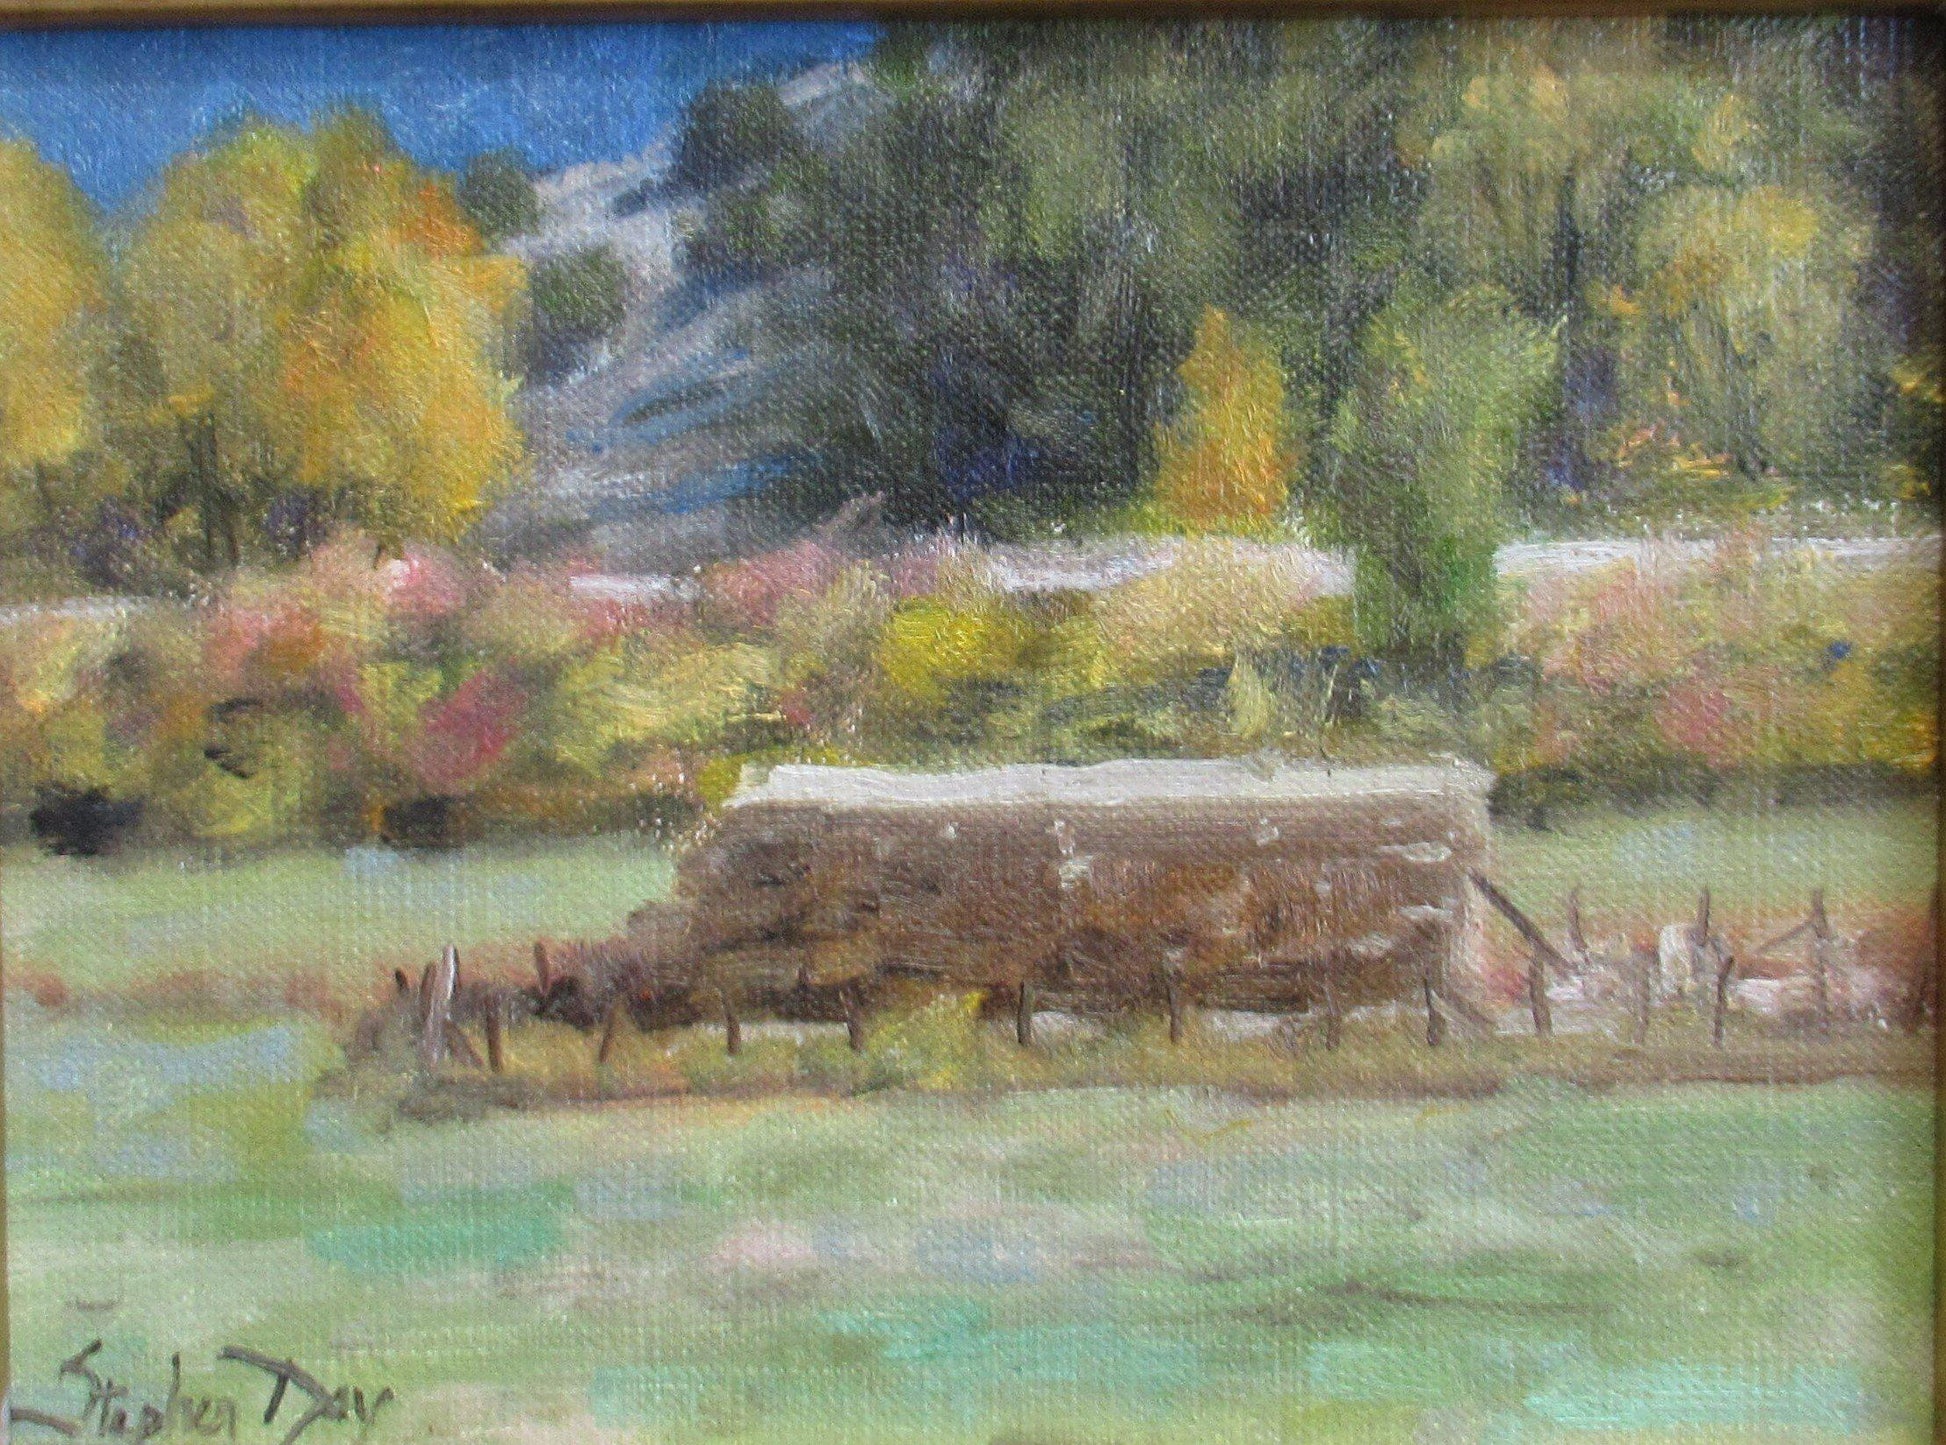 Valley Haystack-Painting-Stephen Day-Sorrel Sky Gallery